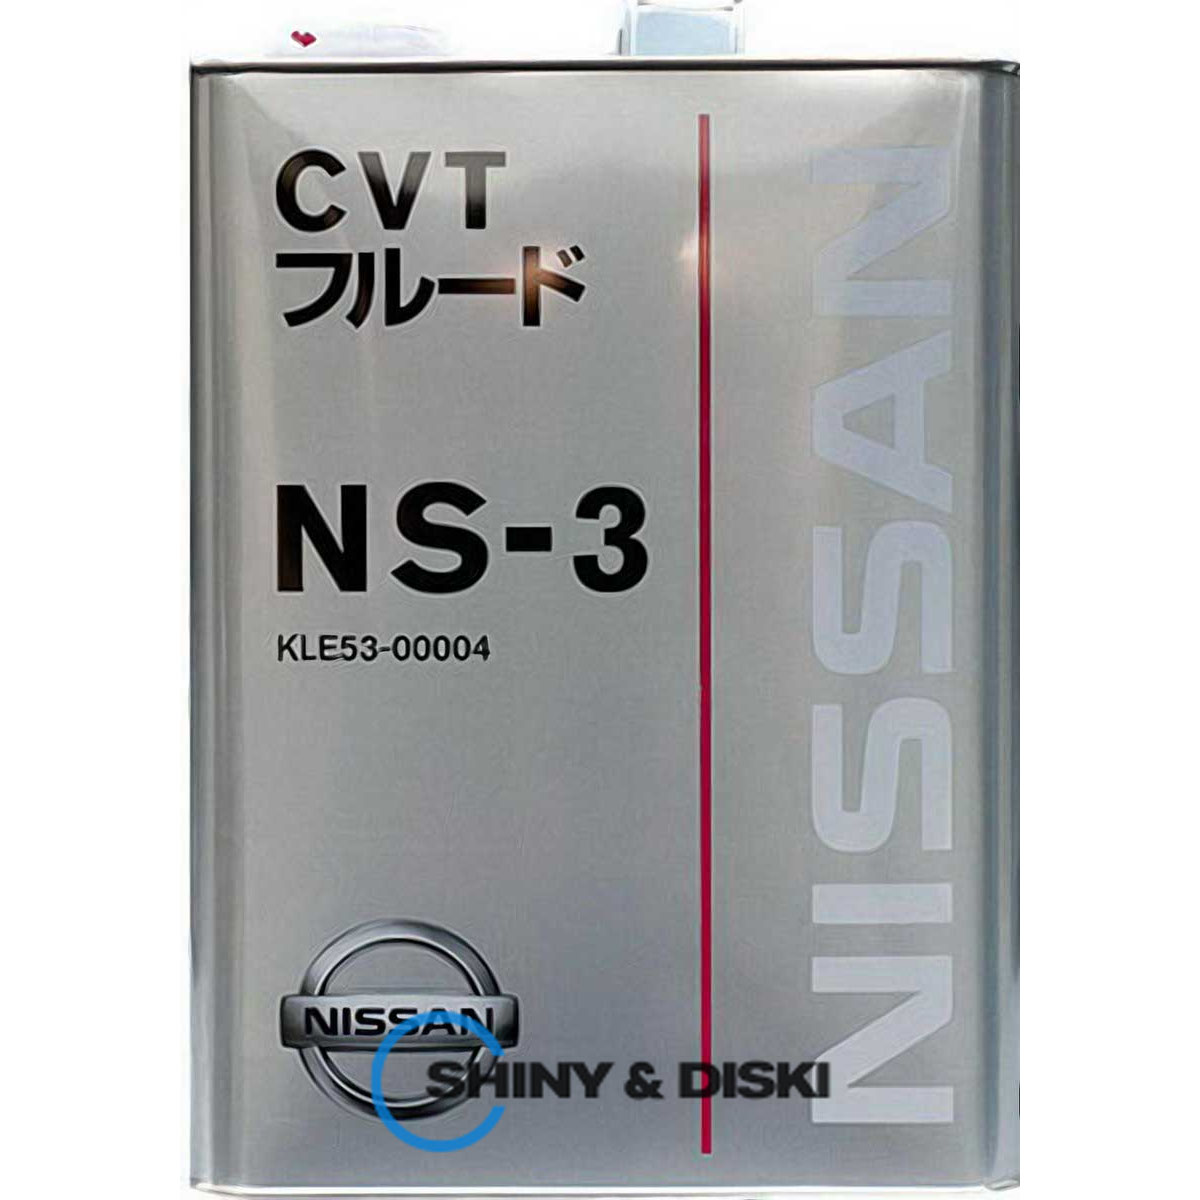 nissan cvt ns-3